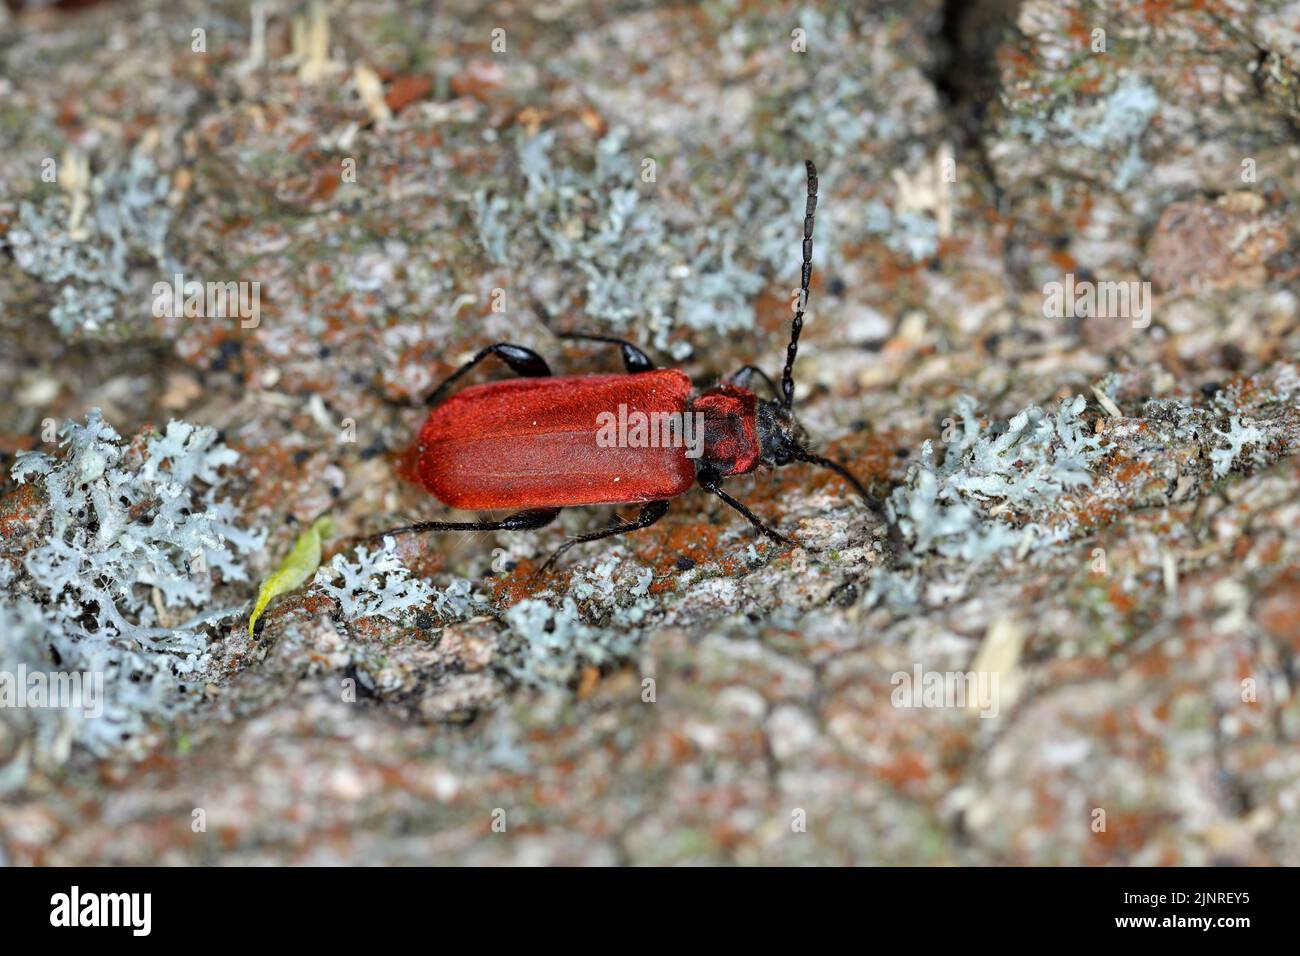 Scarlet-coated longhorn beetle, Welsh oak longhorn beetle (Pyrrhidium sanguineum). A female laying eggs on wood. Stock Photo